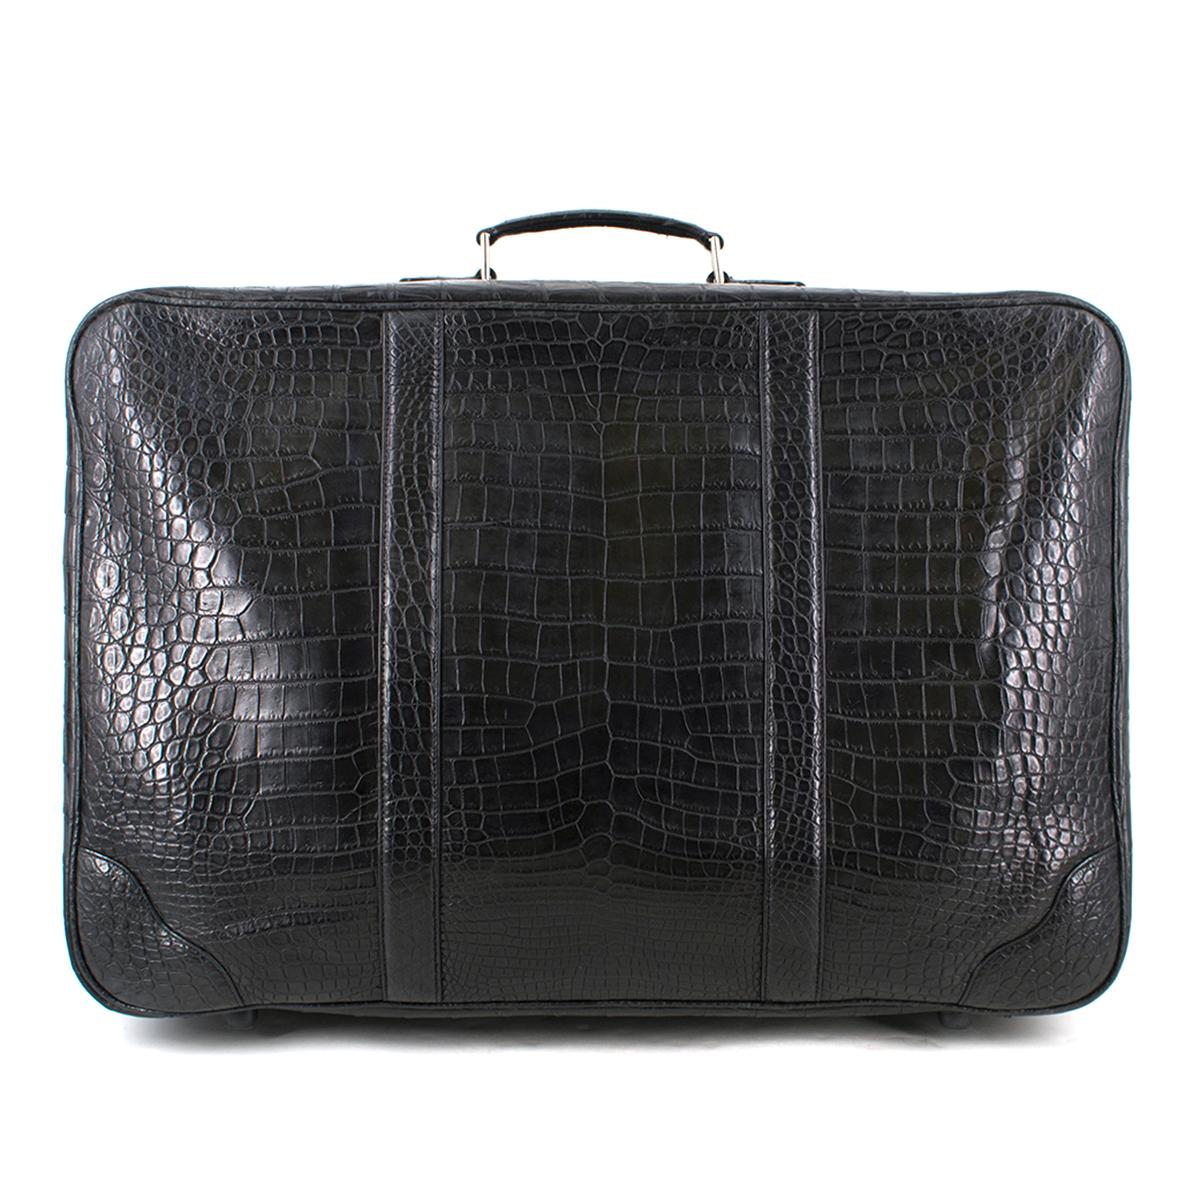 black leather suitcase